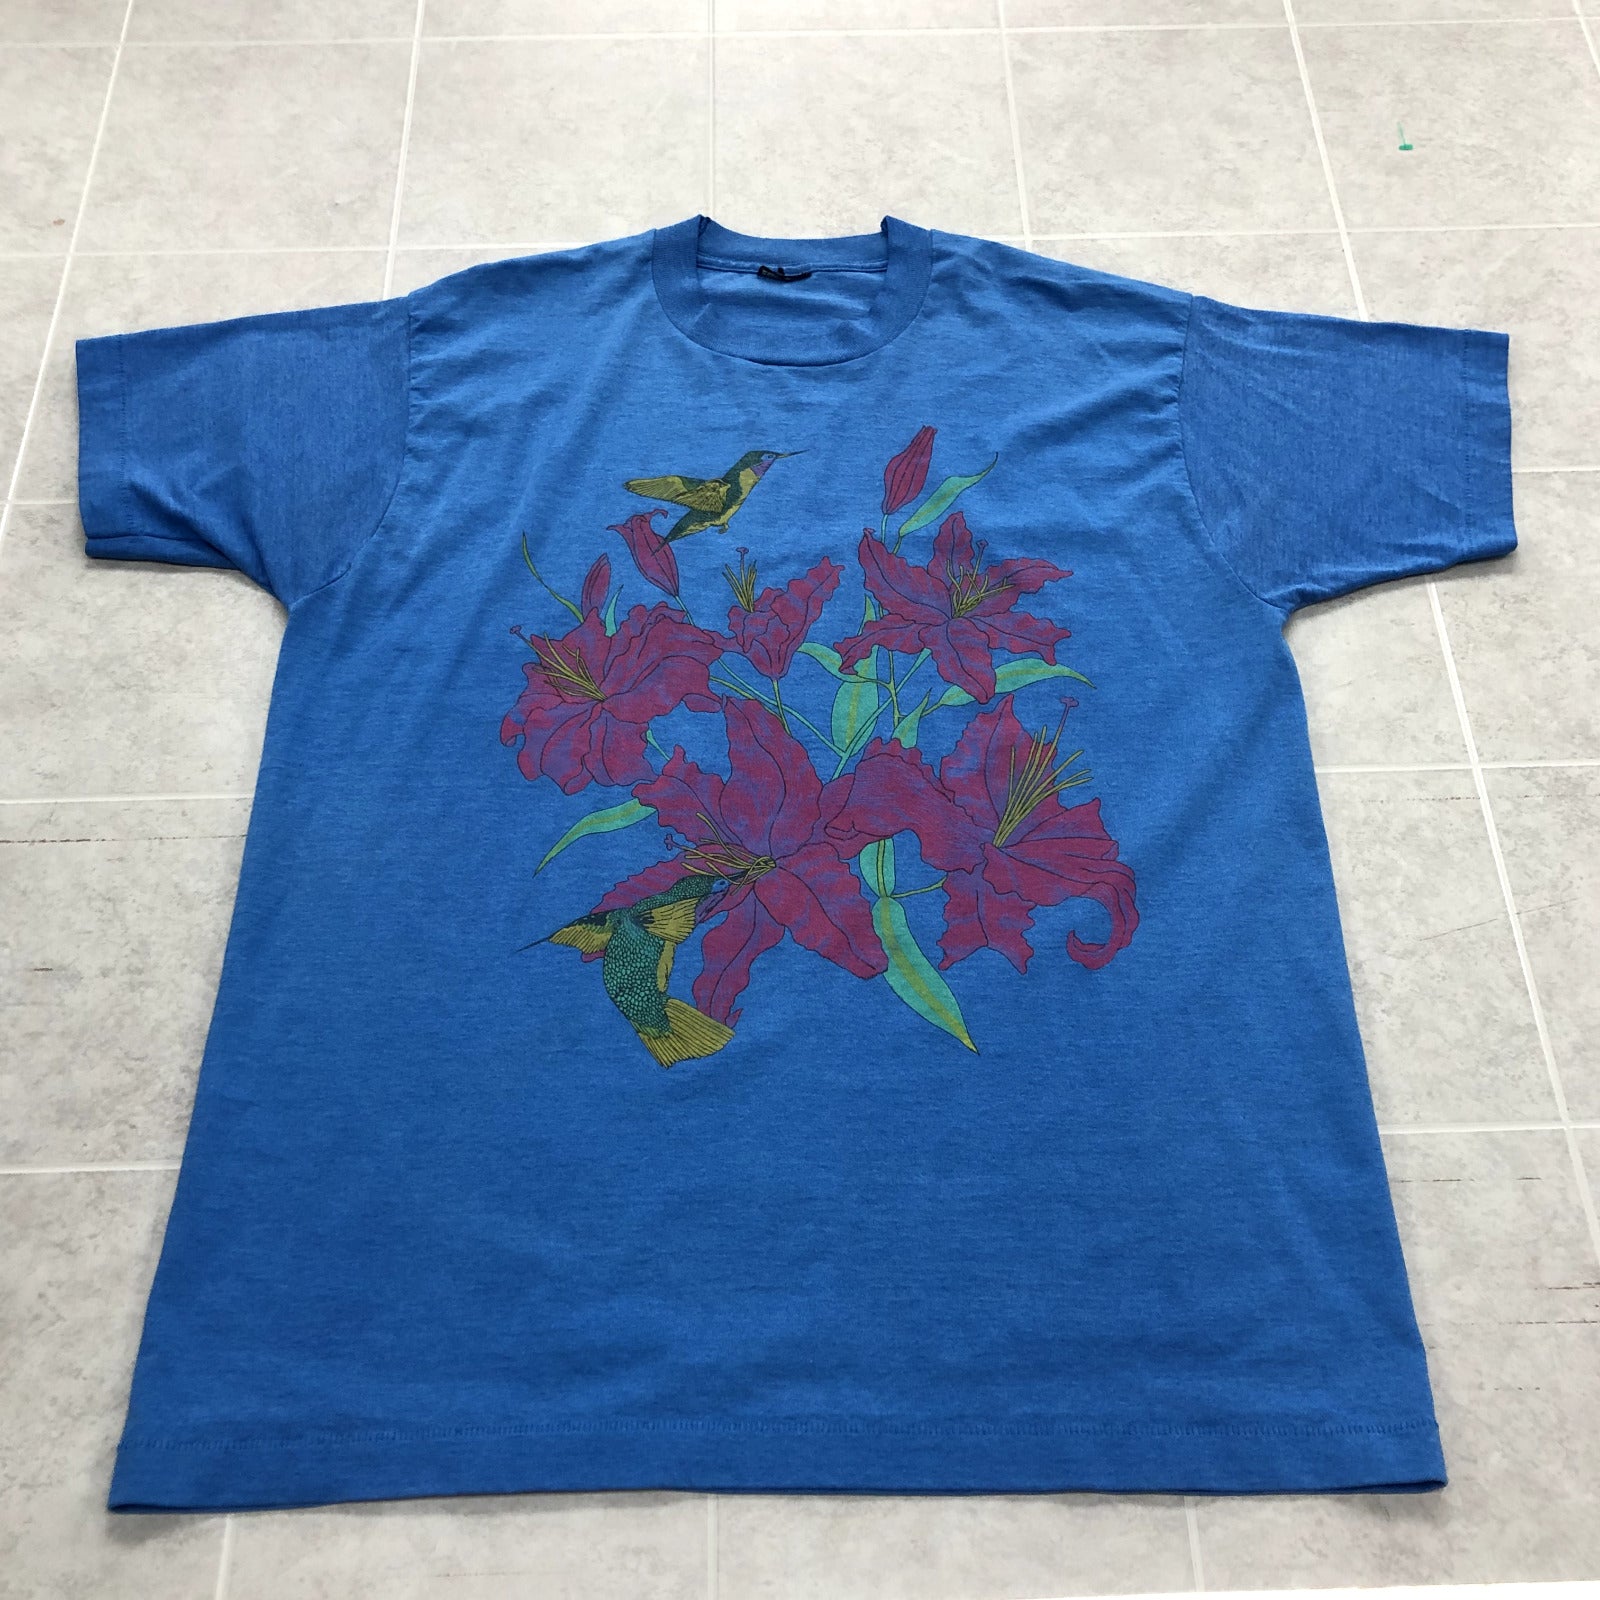 Vintage Blue Short Sleeve Crew Neck Graphic Bird Floral T-shirt Adult Size XL